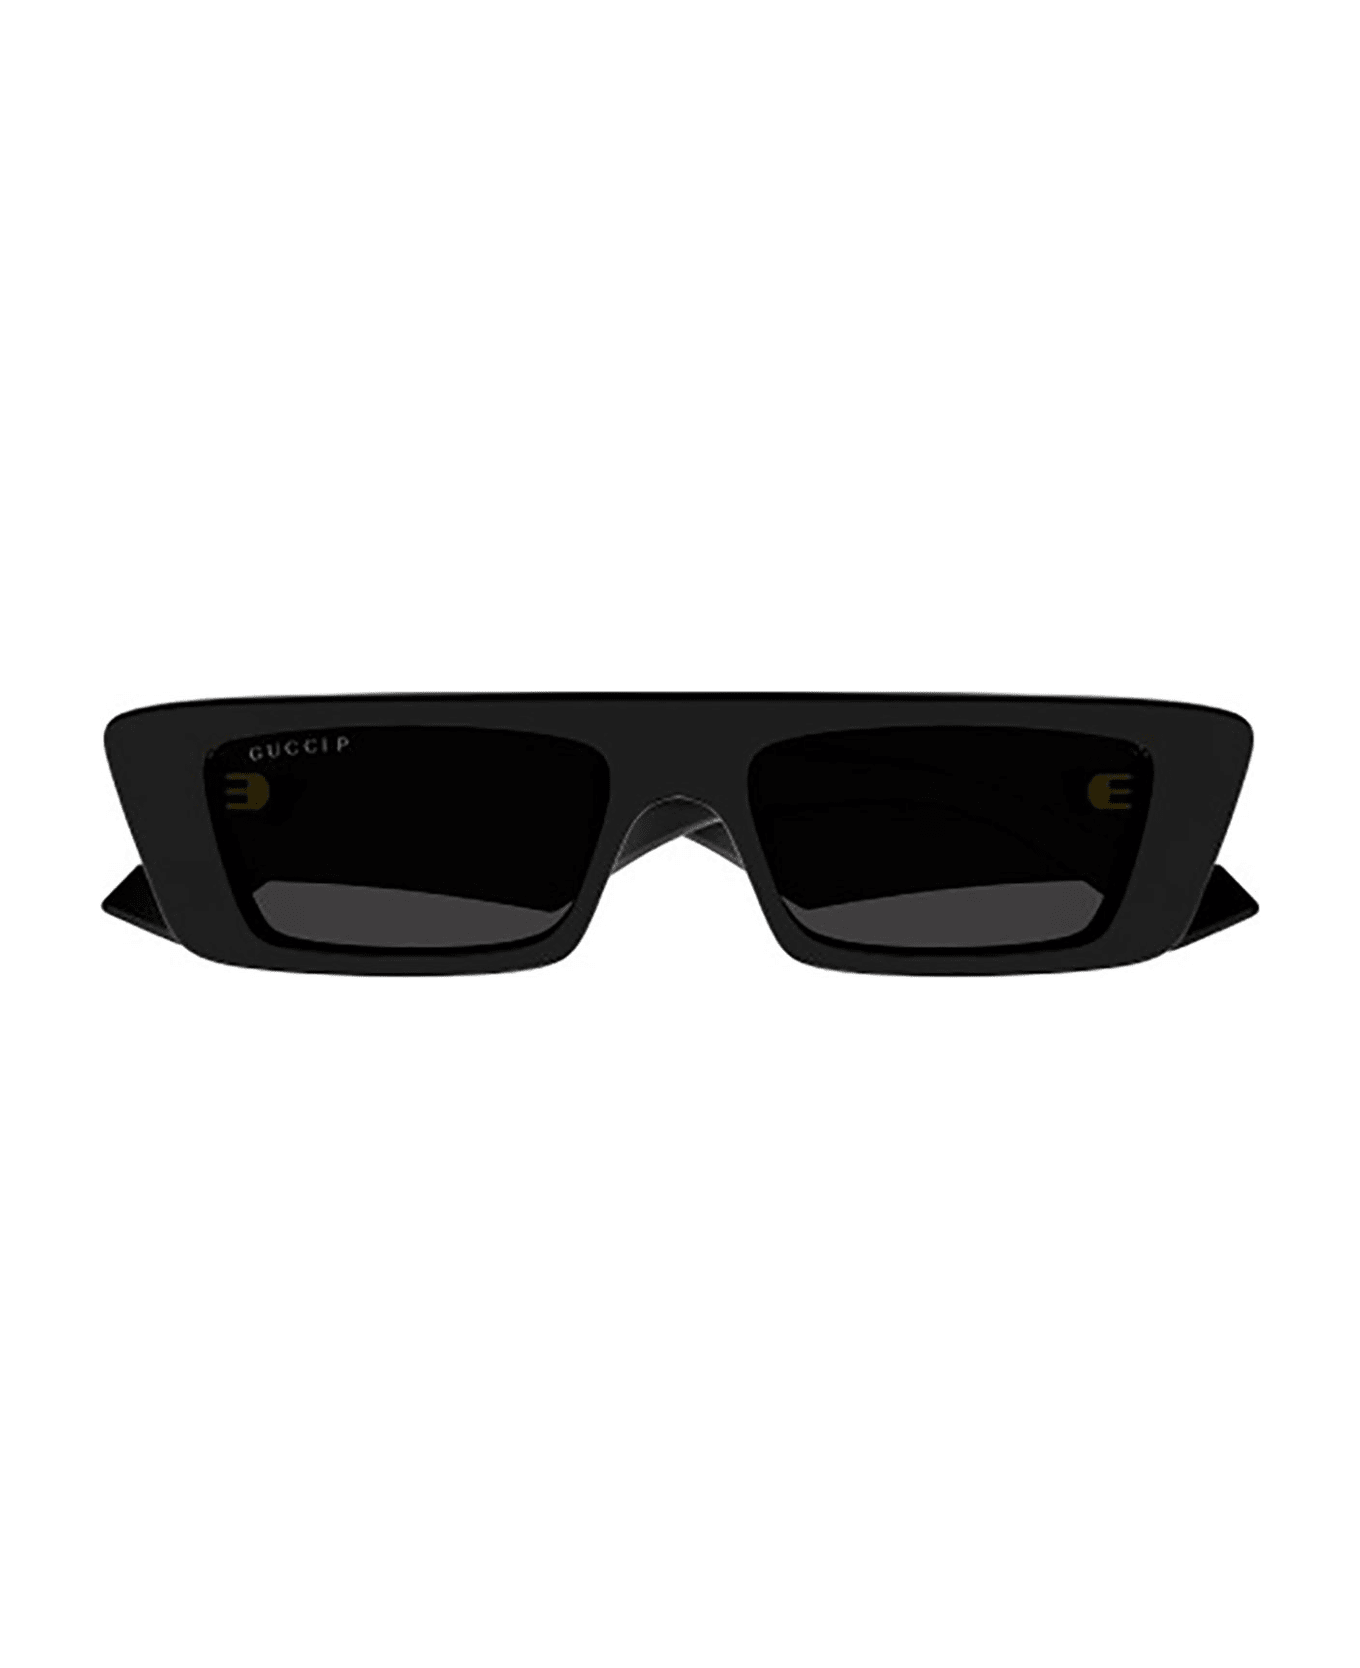 Gucci Eyewear Gg1331s Sunglasses - 002 black black brown サングラス